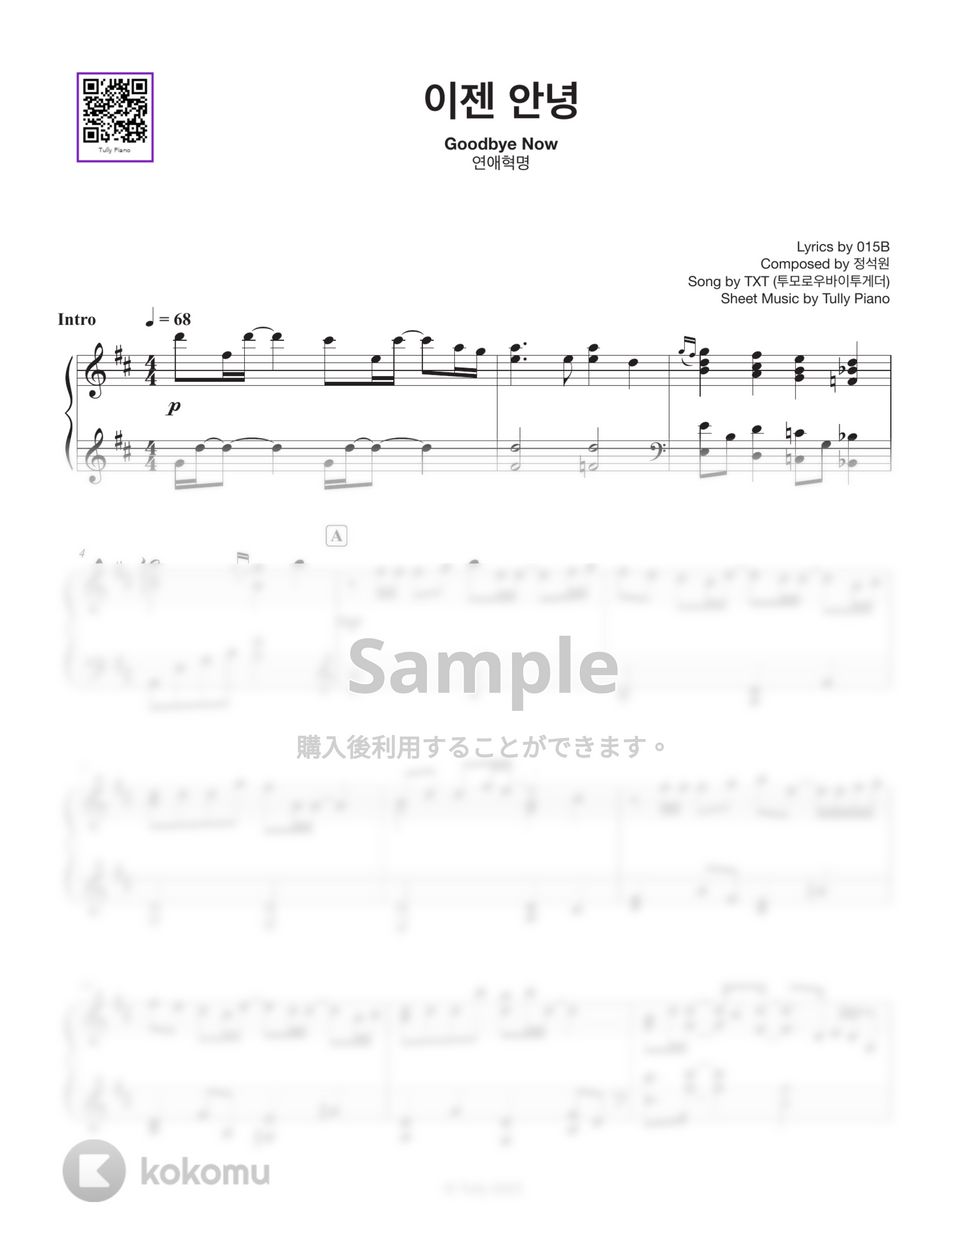 TXT (투모로우바이투게더) - 이젠 안녕 (Goodbye Now) (2 Sheets : Original & Transposed key) by Tully Piano